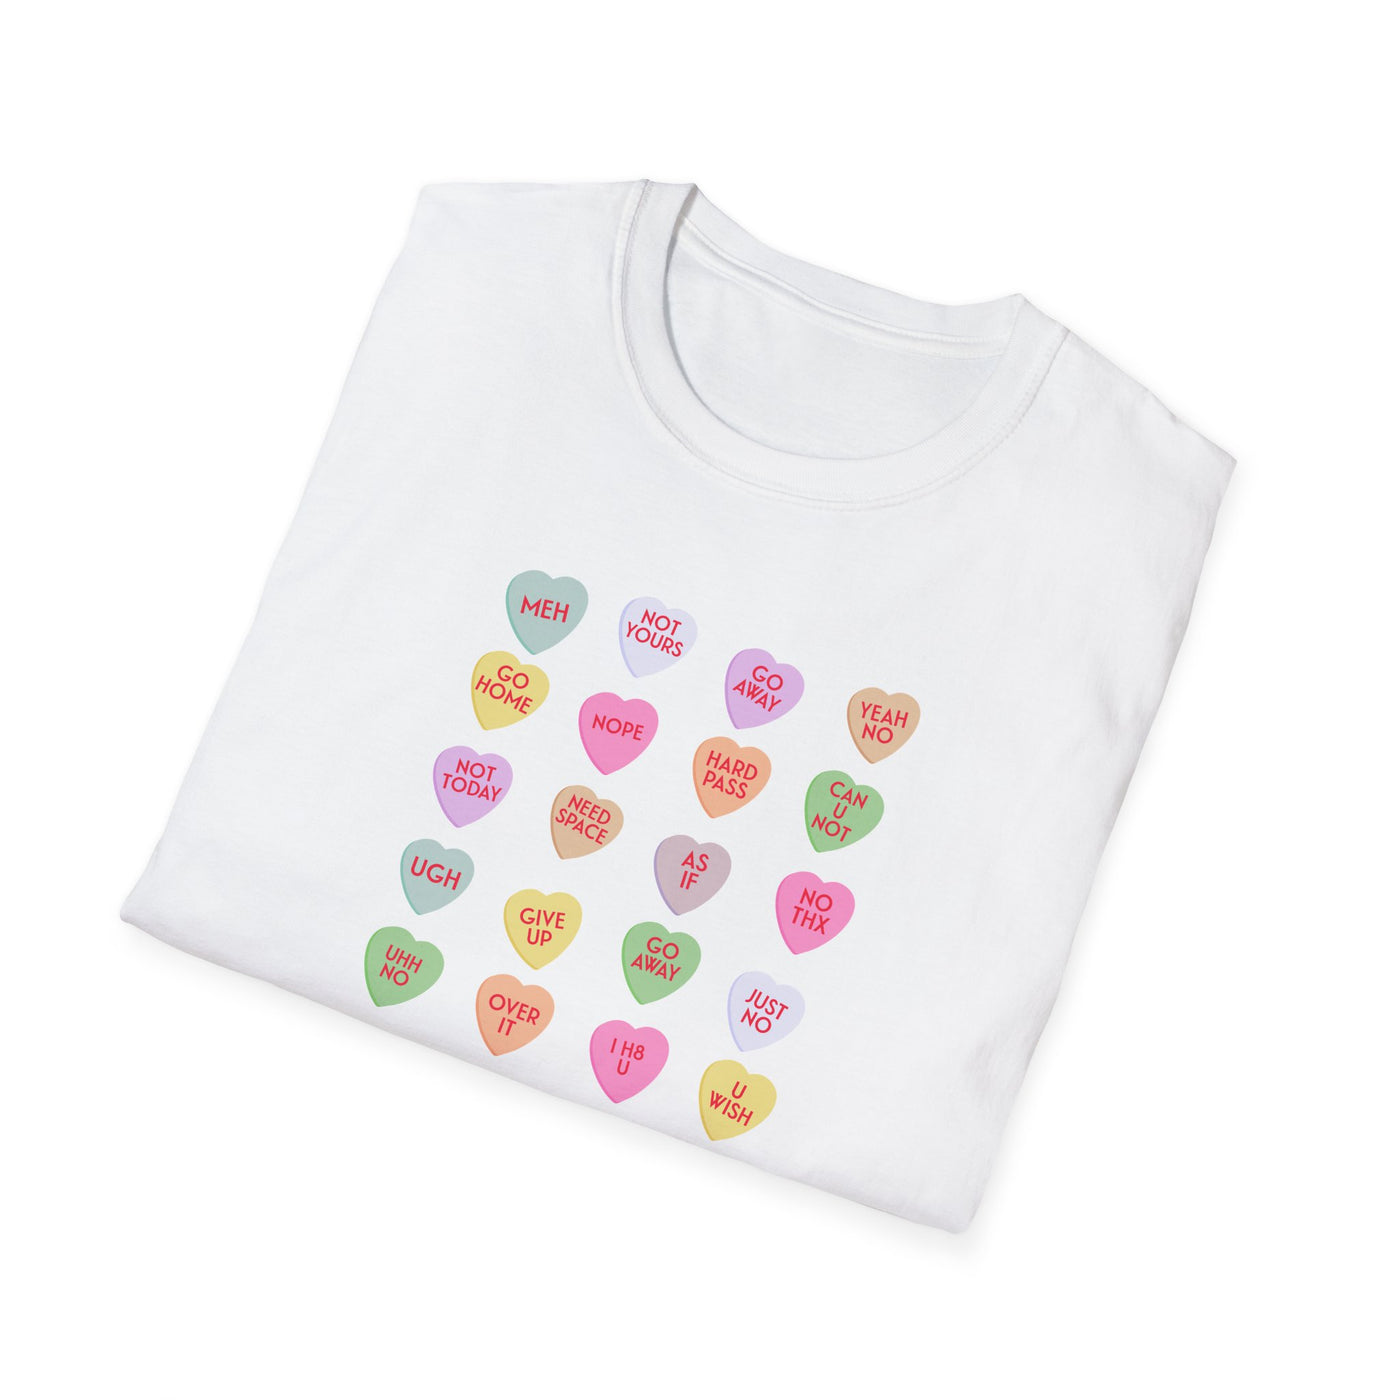 End-Of-Conversation Hearts Unisex T-Shirt